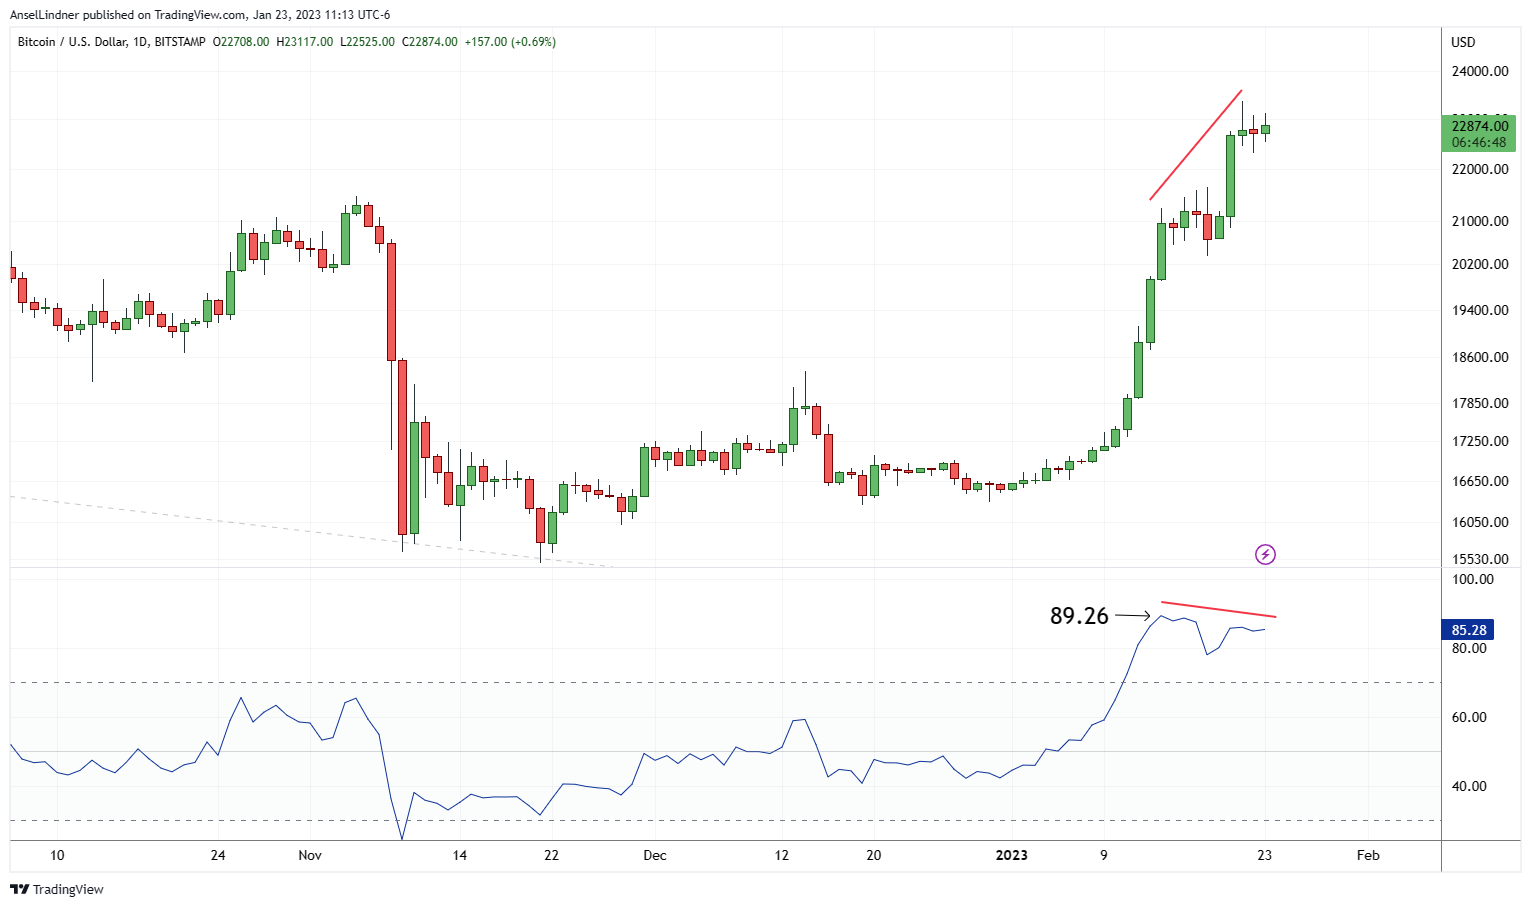 Bitcoin daily chart with RSI and bearish divergence